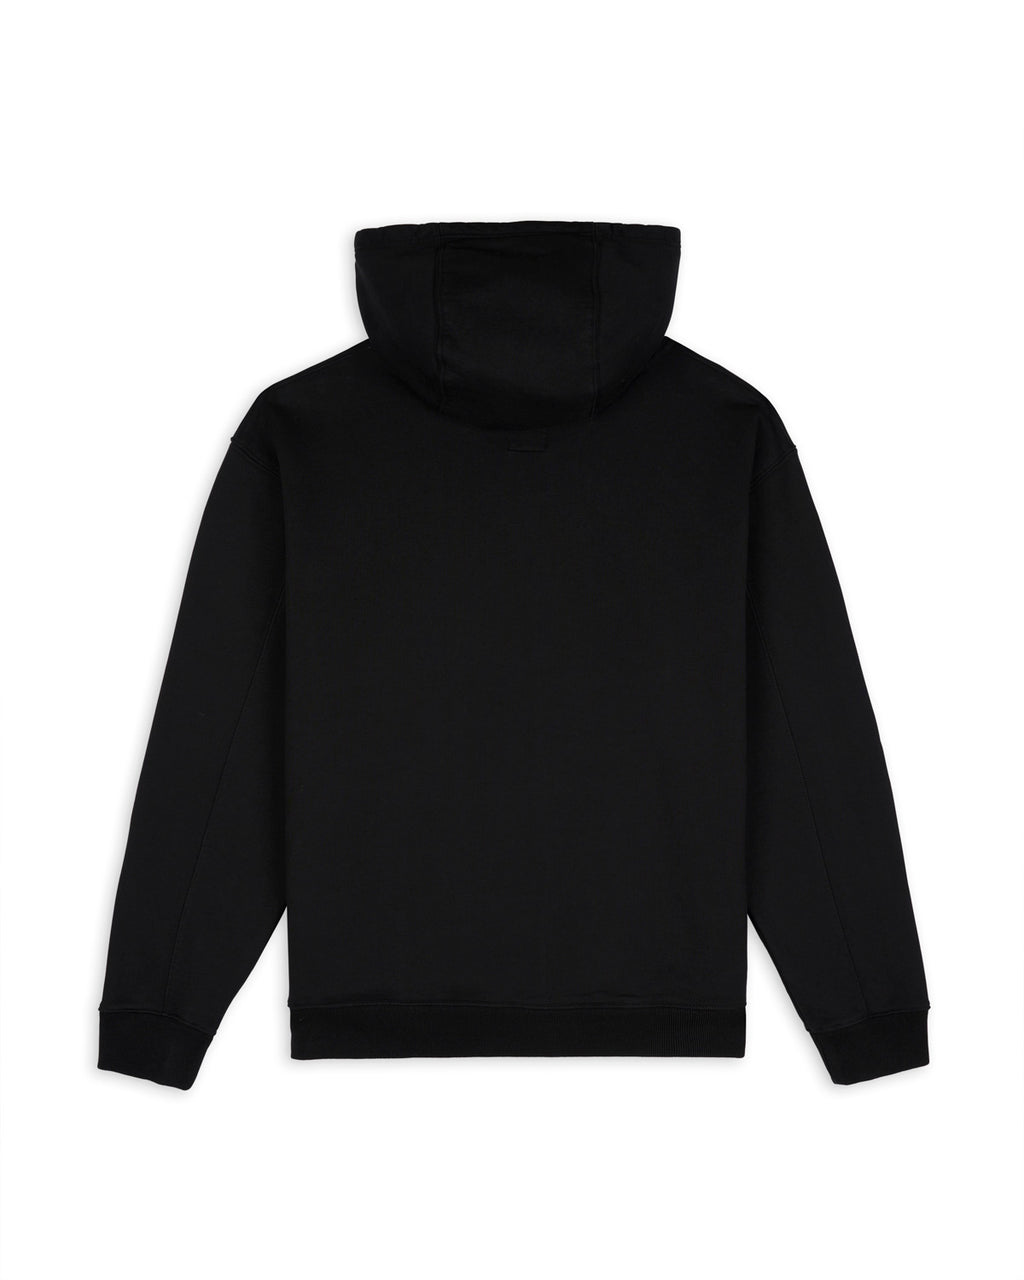 Ant War Hooded Sweatshirt - Black 2